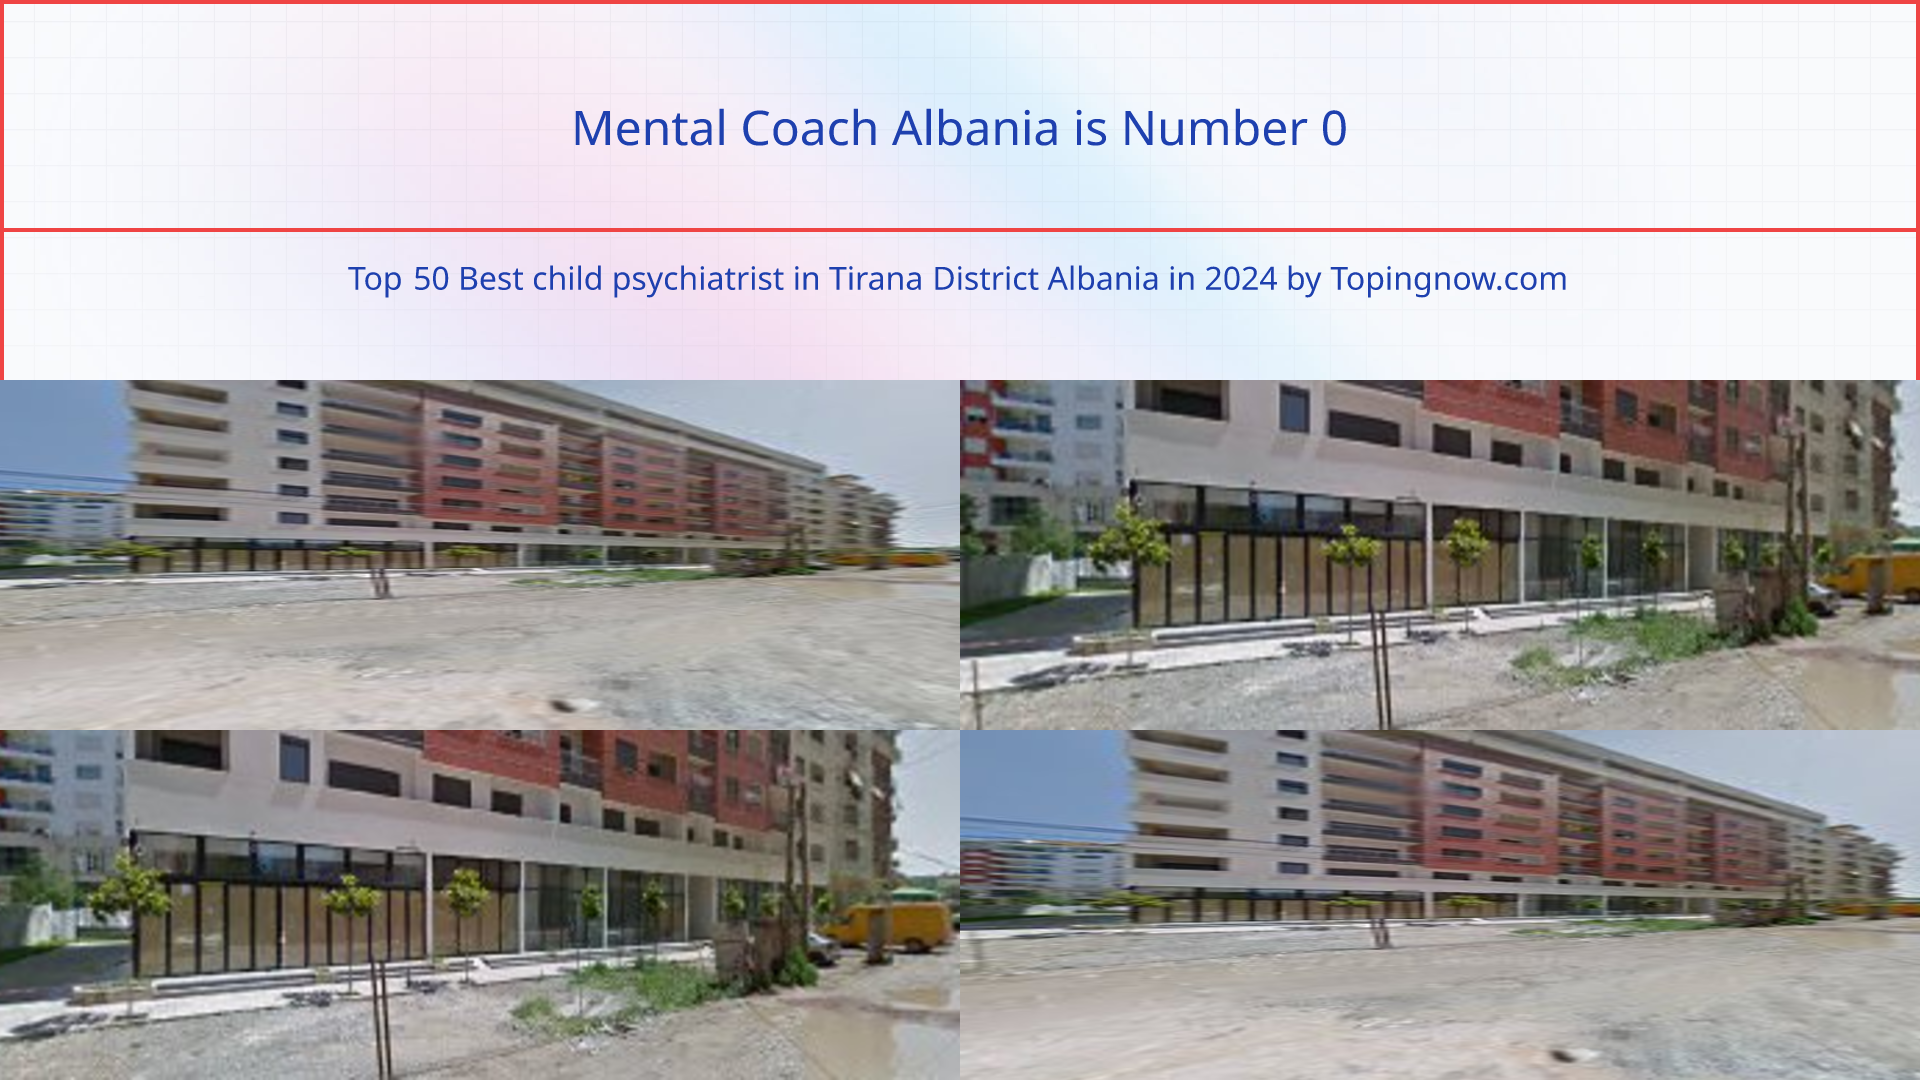 Mental Coach Albania: Top 50 Best child psychiatrist in Tirana District Albania in 2024